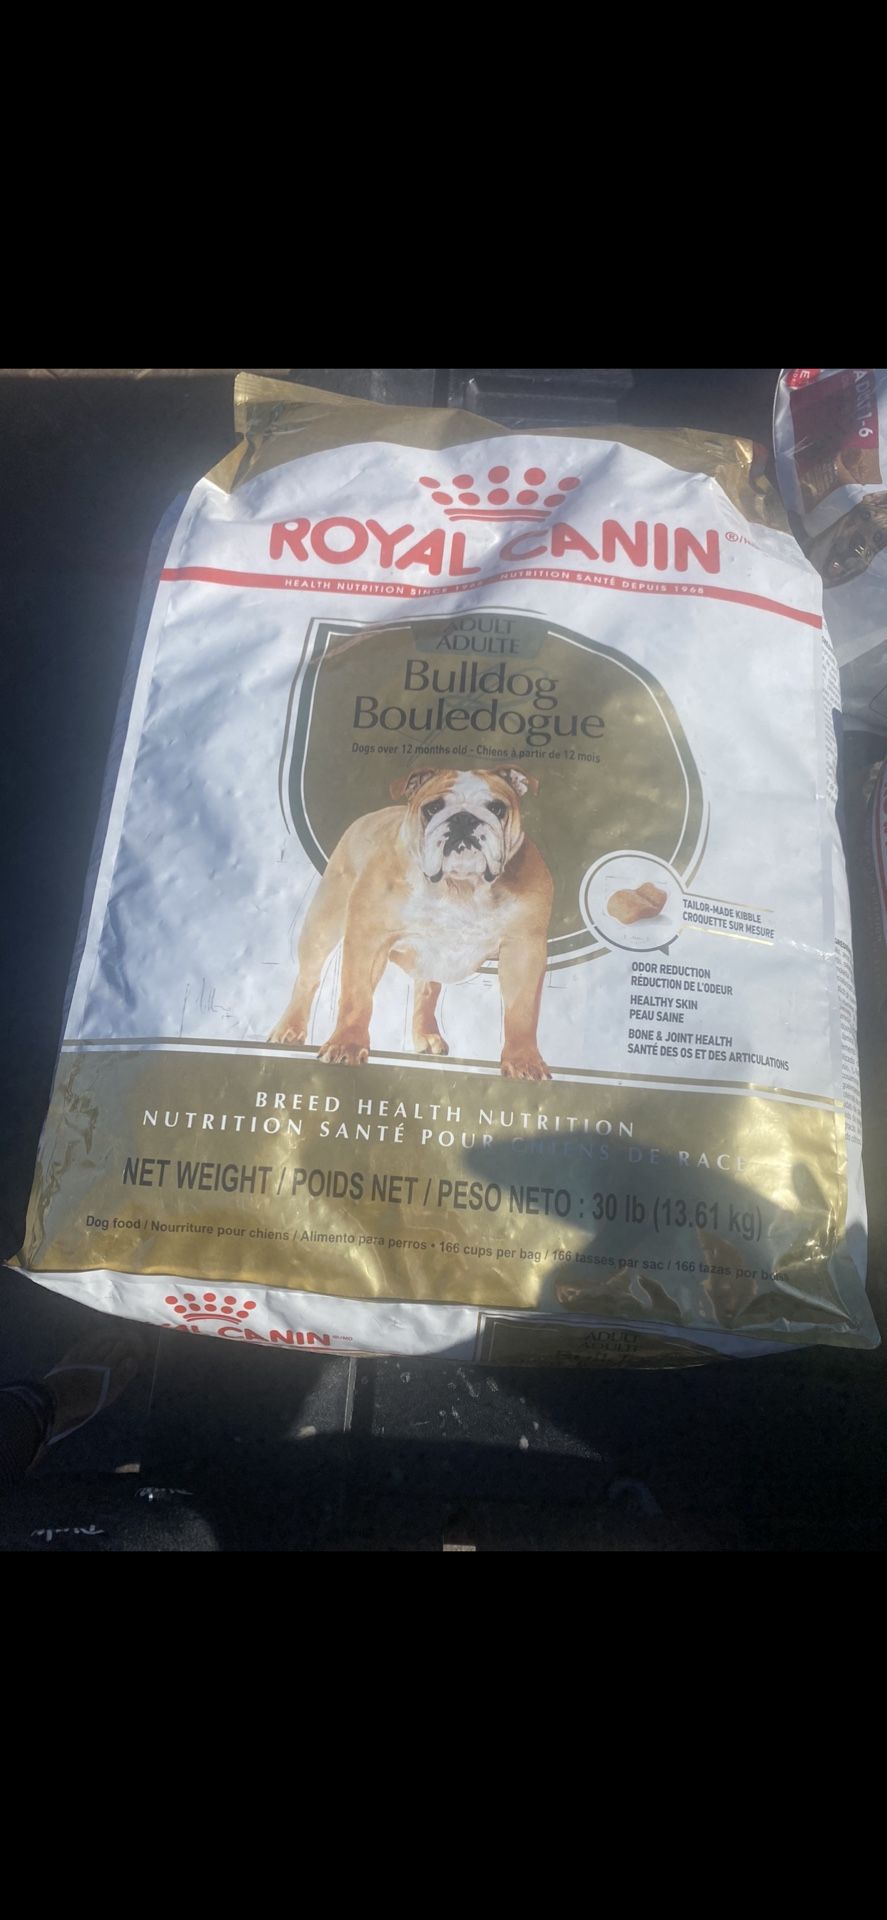 Royal Canin Dog Food 